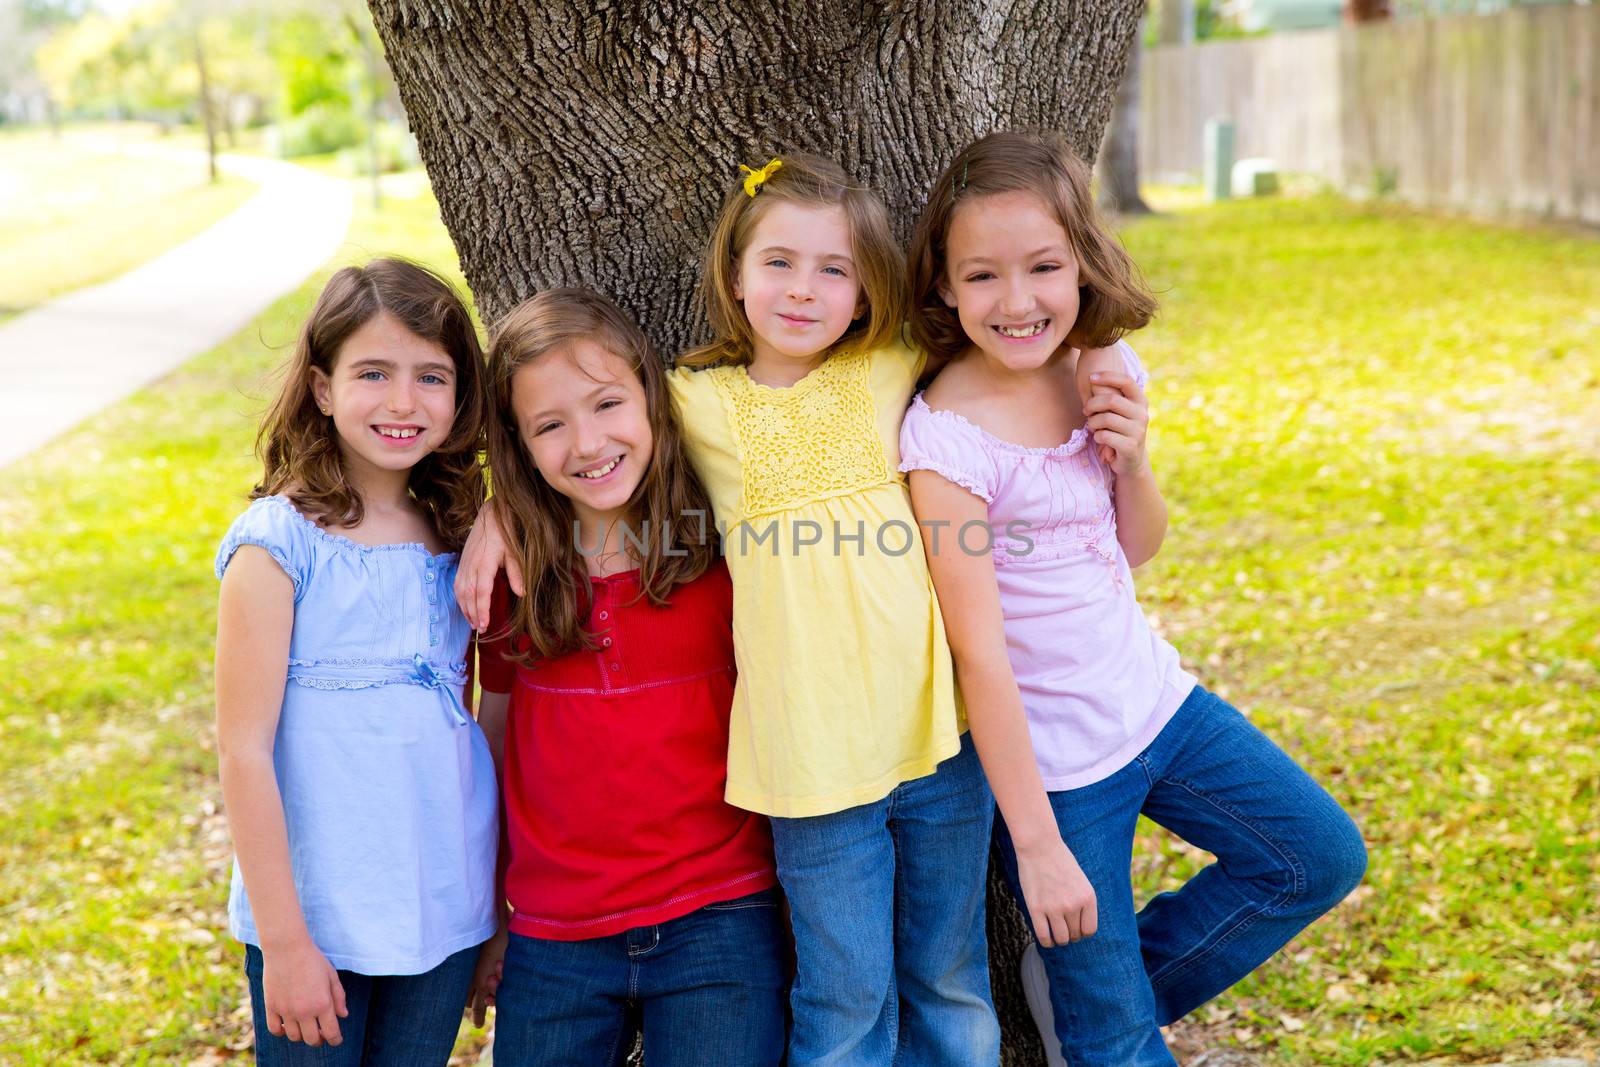 Children group friend girls playing on tree by lunamarina